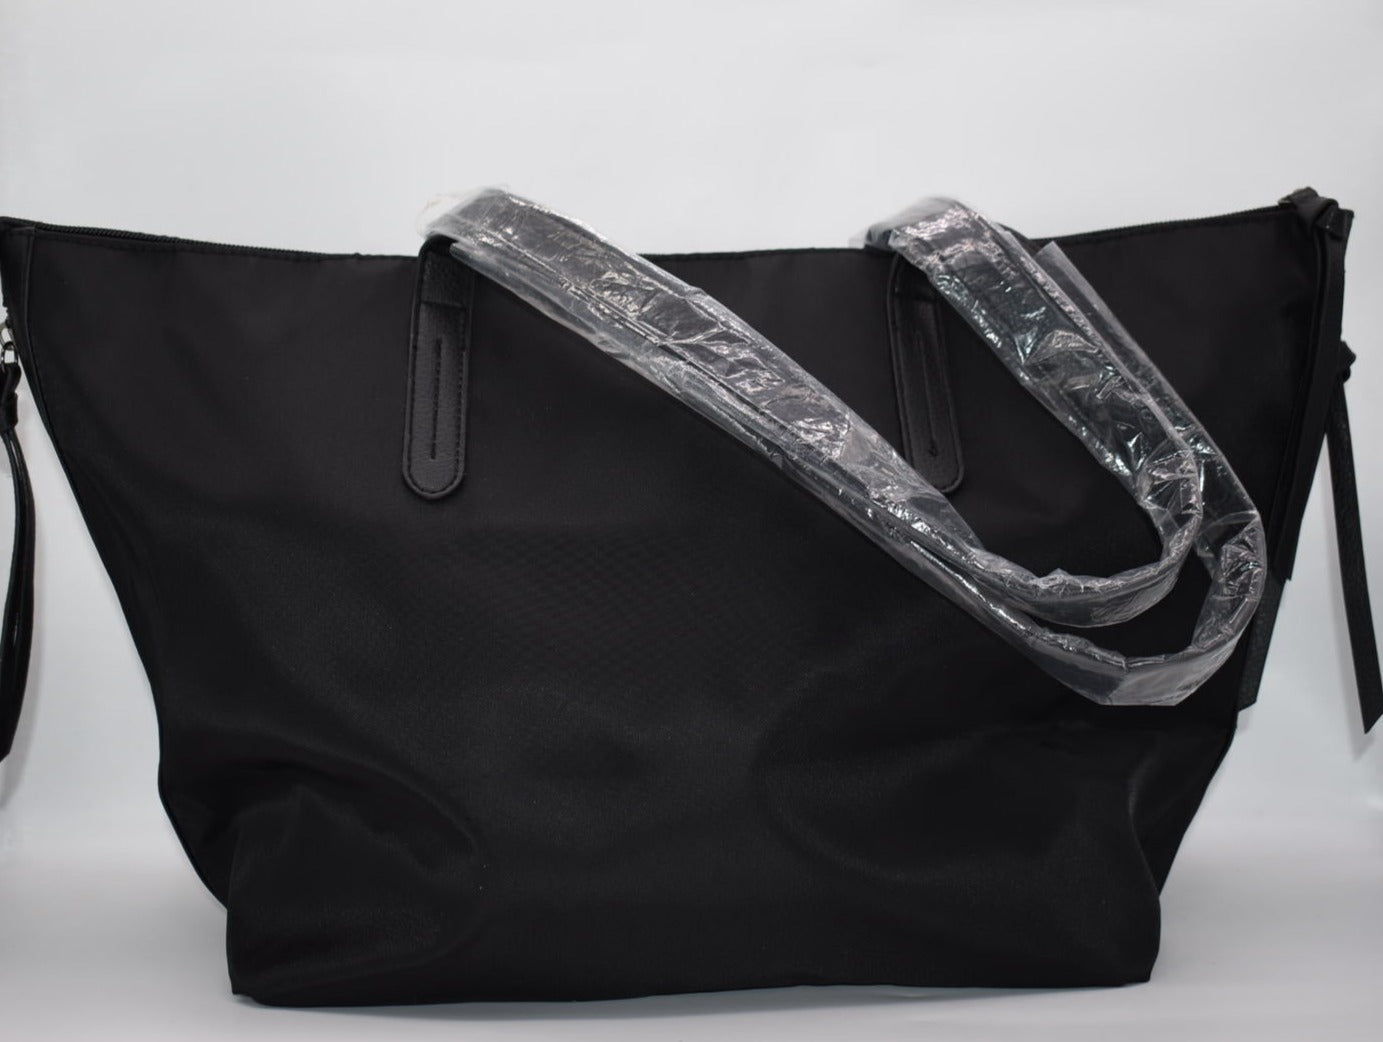 Botkier Women's Bond Tote Bag